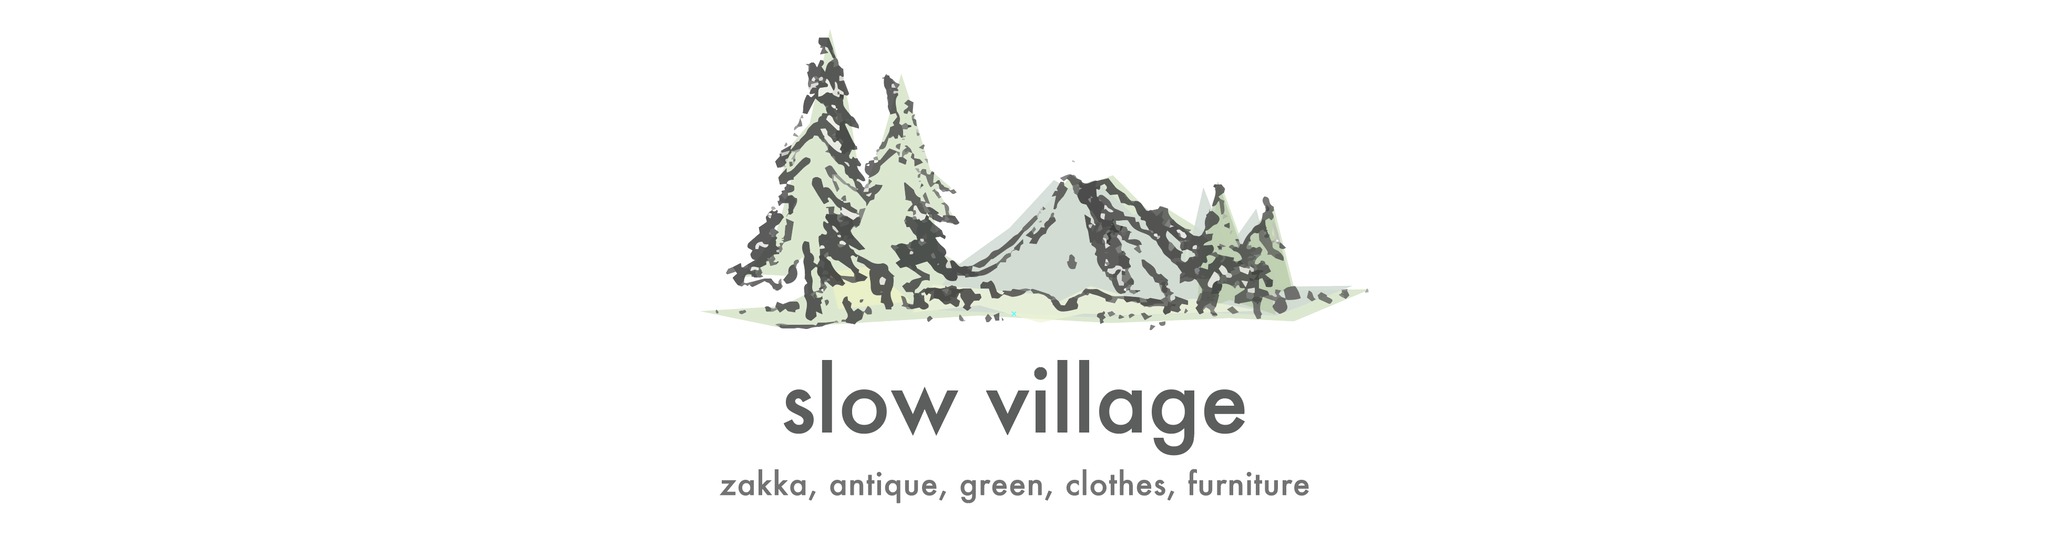 slowvillage